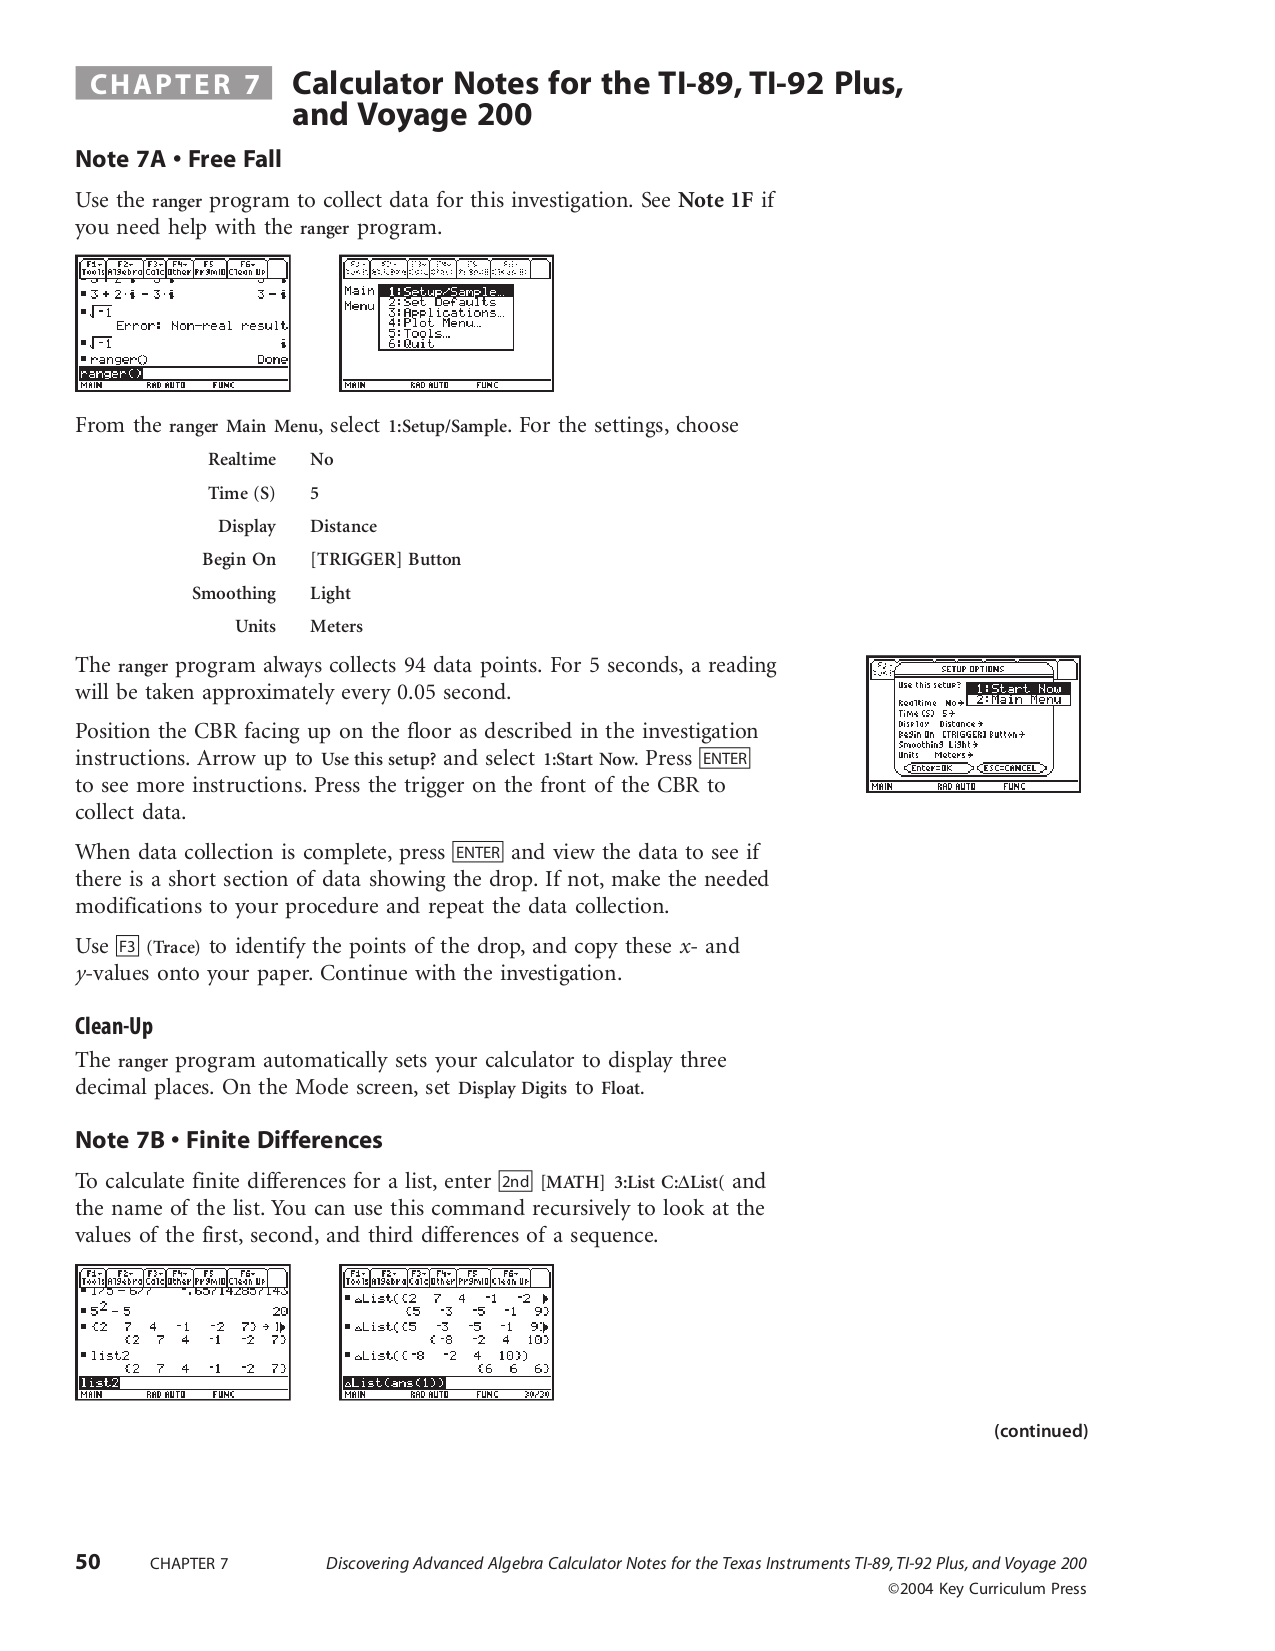 pdf for TI Calculator Voyage 200 manual